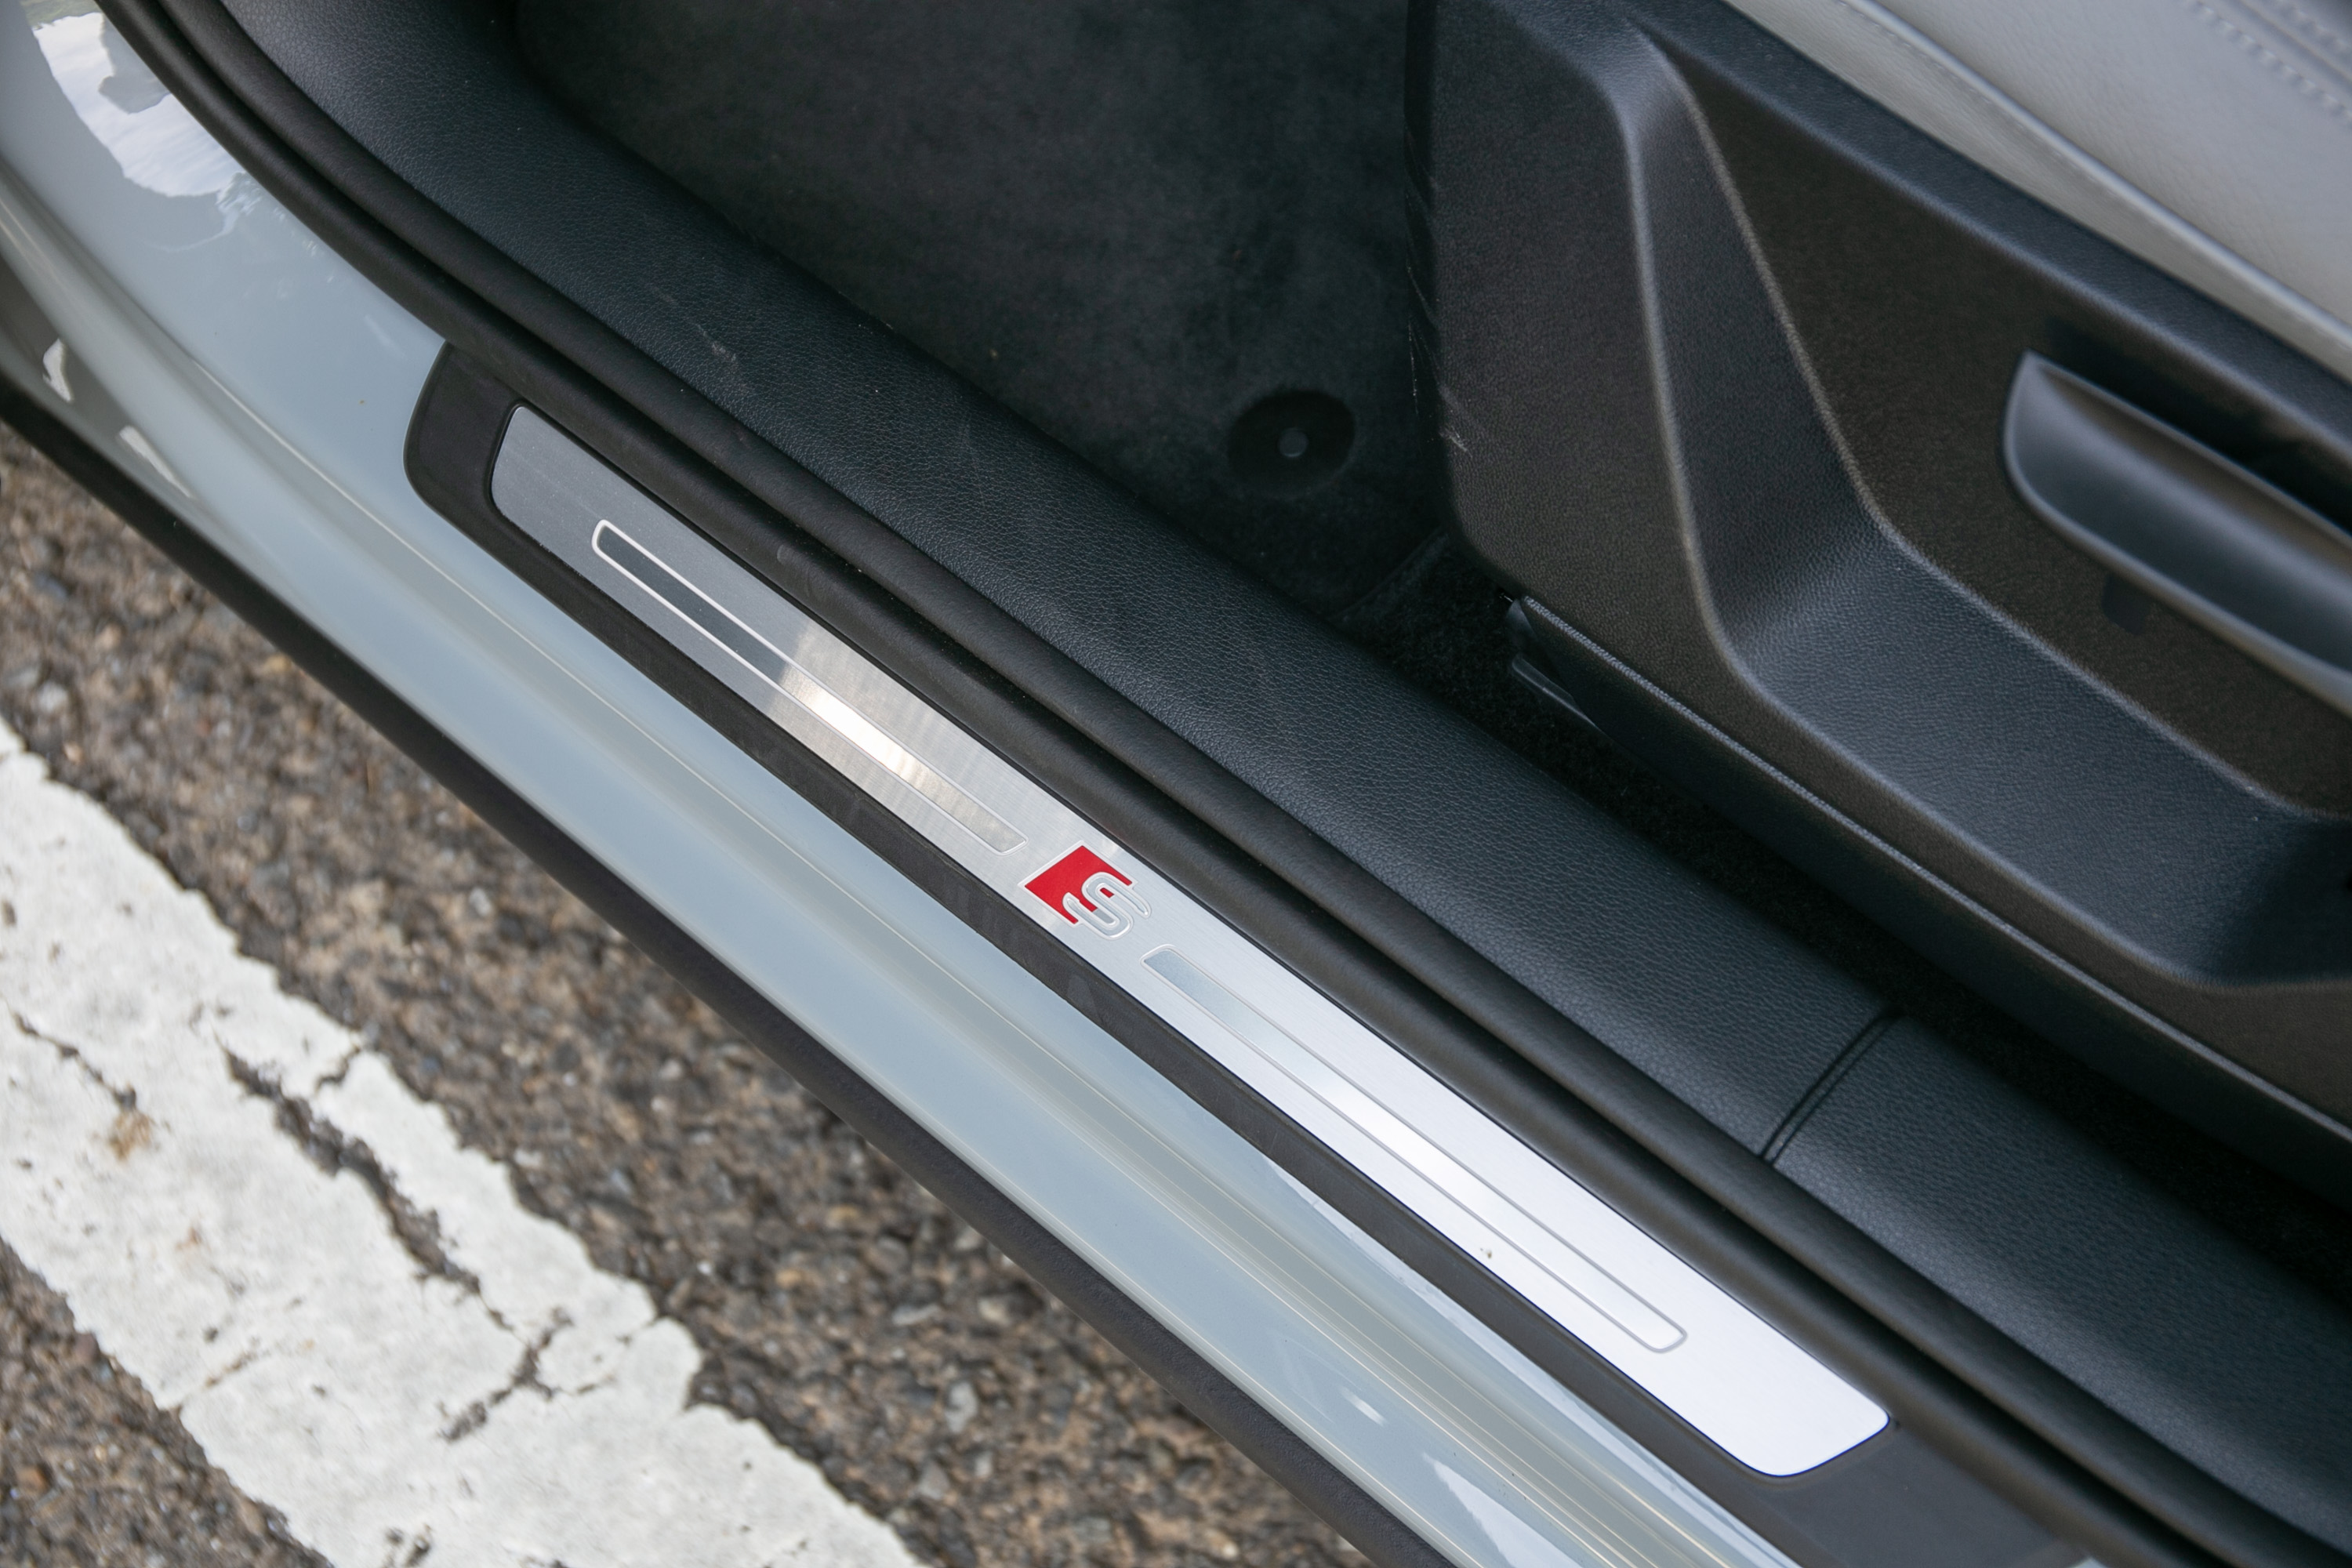 Q2 35 TFSI S line 車型專屬的 S line 式樣發光門檻踏板。